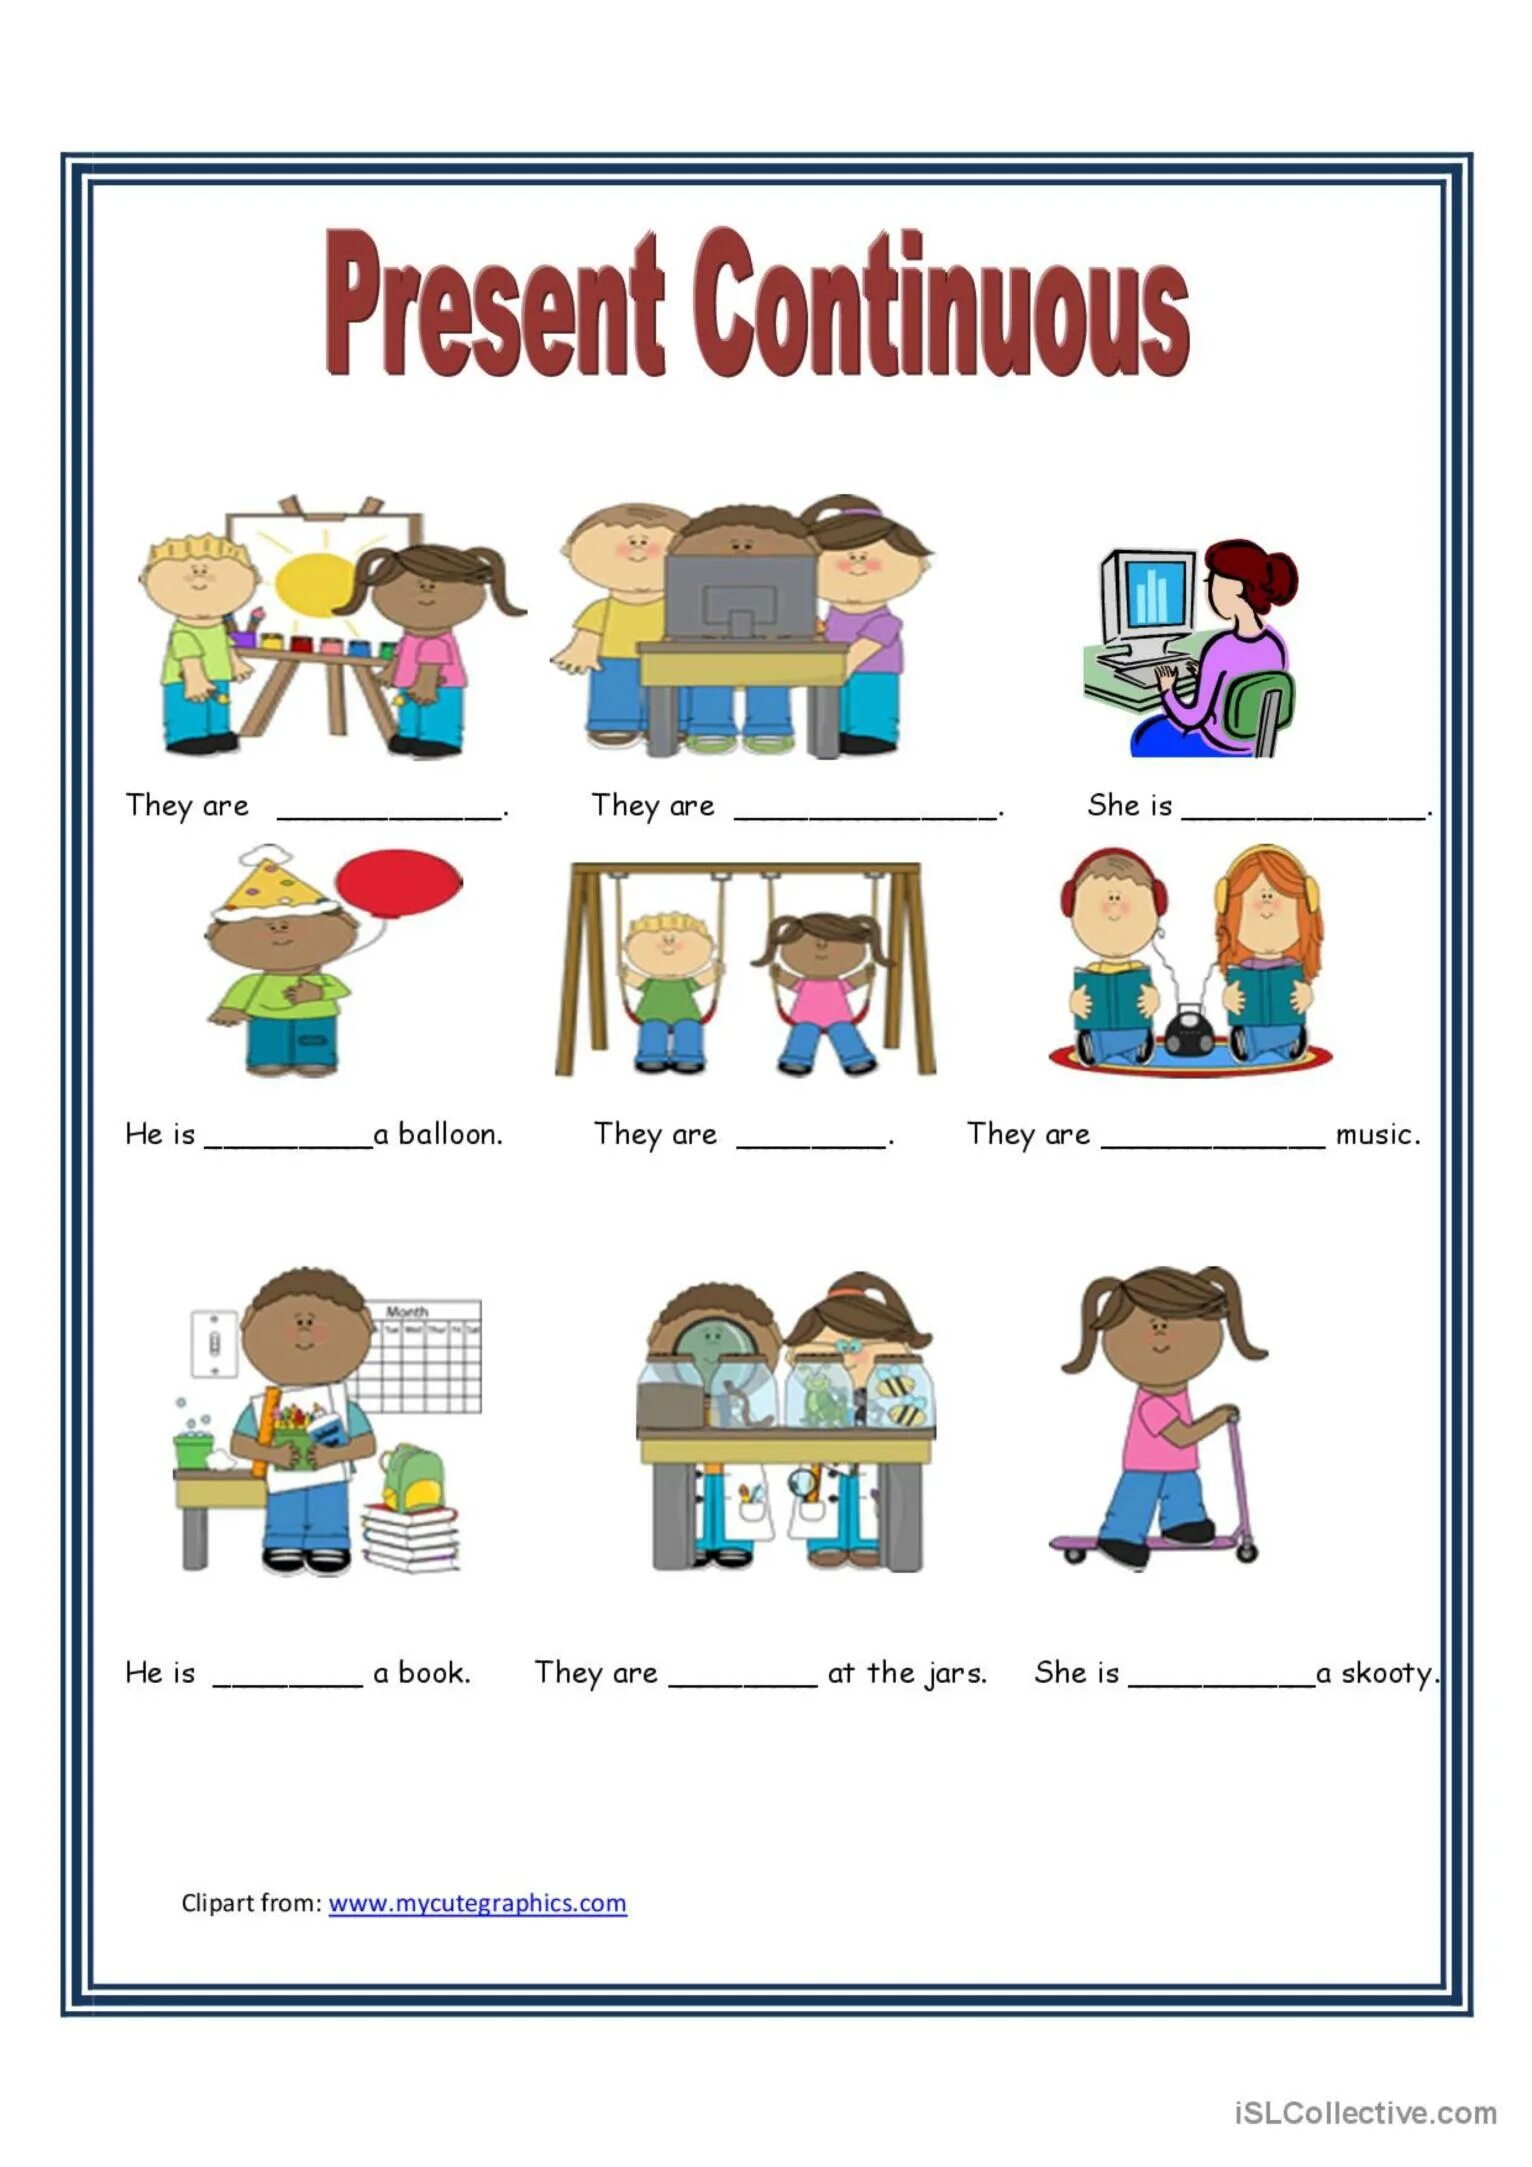 Present Continuous упражнения fir Kids. Present Continuous для детей Worksheets. Рабочий лист present Continuous. Present Continuous воркшит.